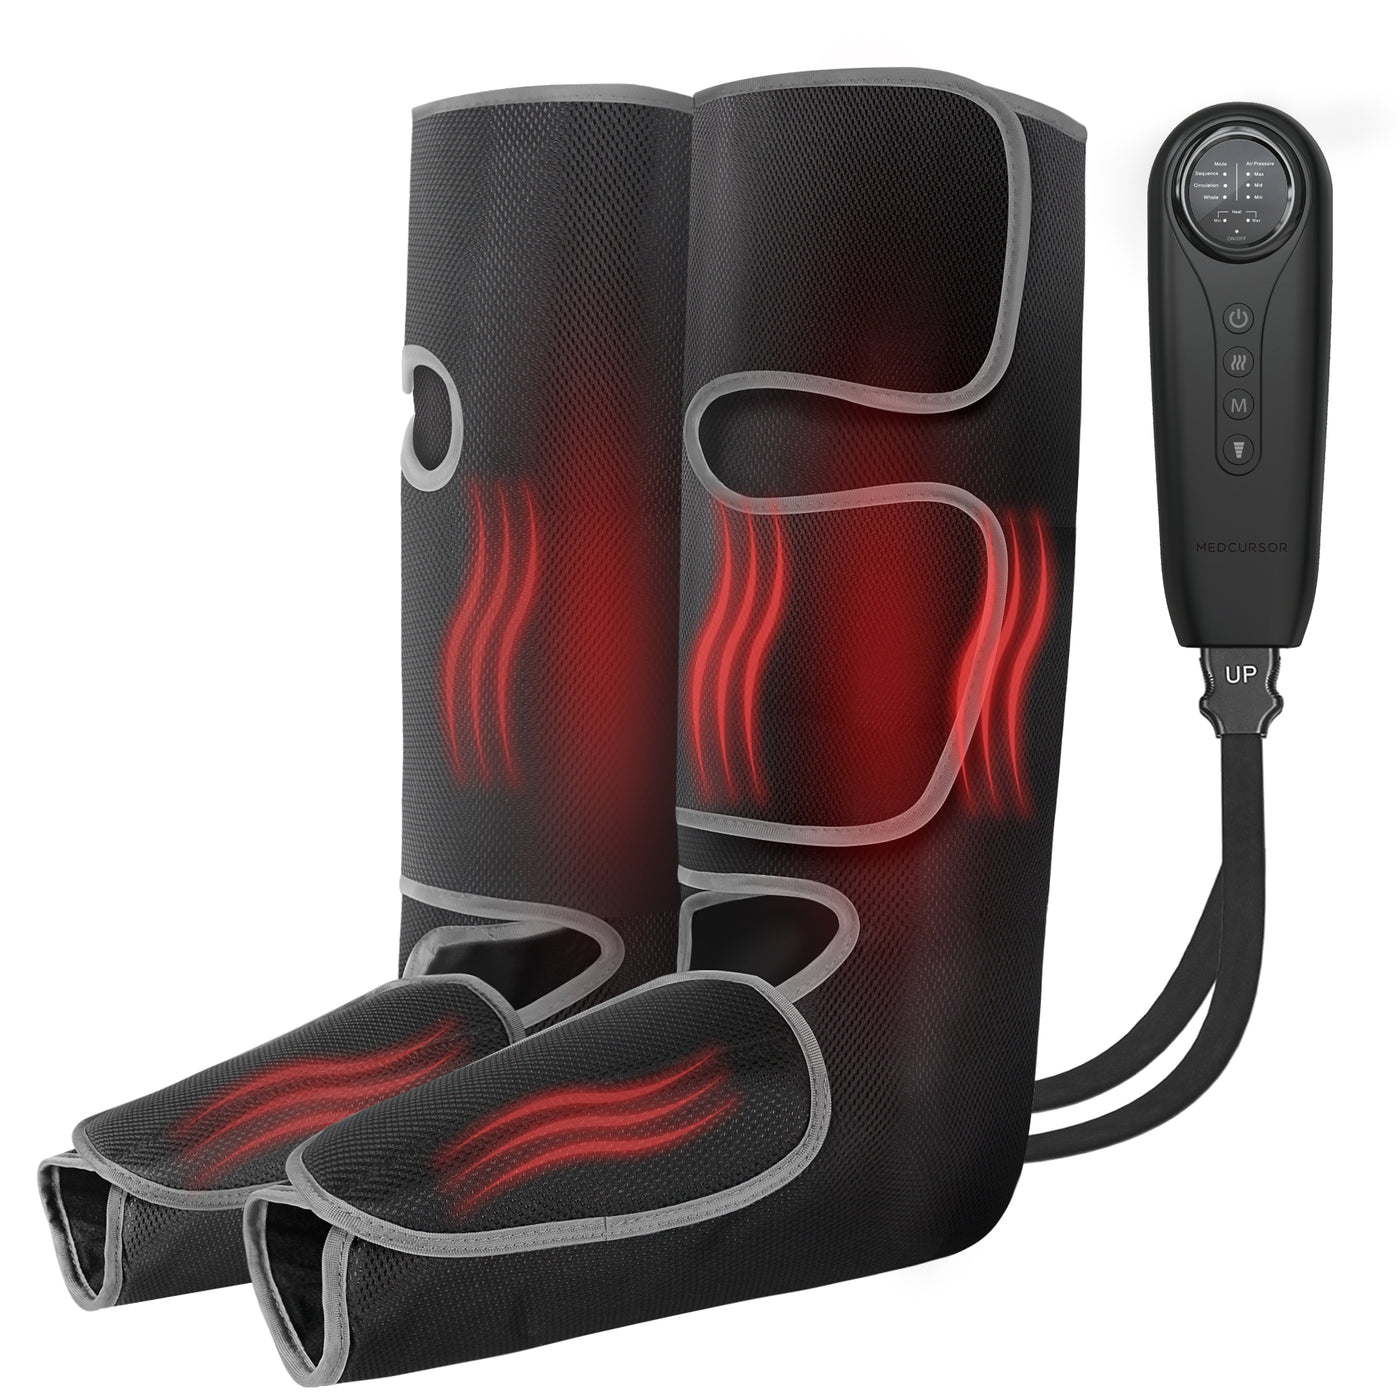 Air Compression Leg Massager AIR-C+HEAT